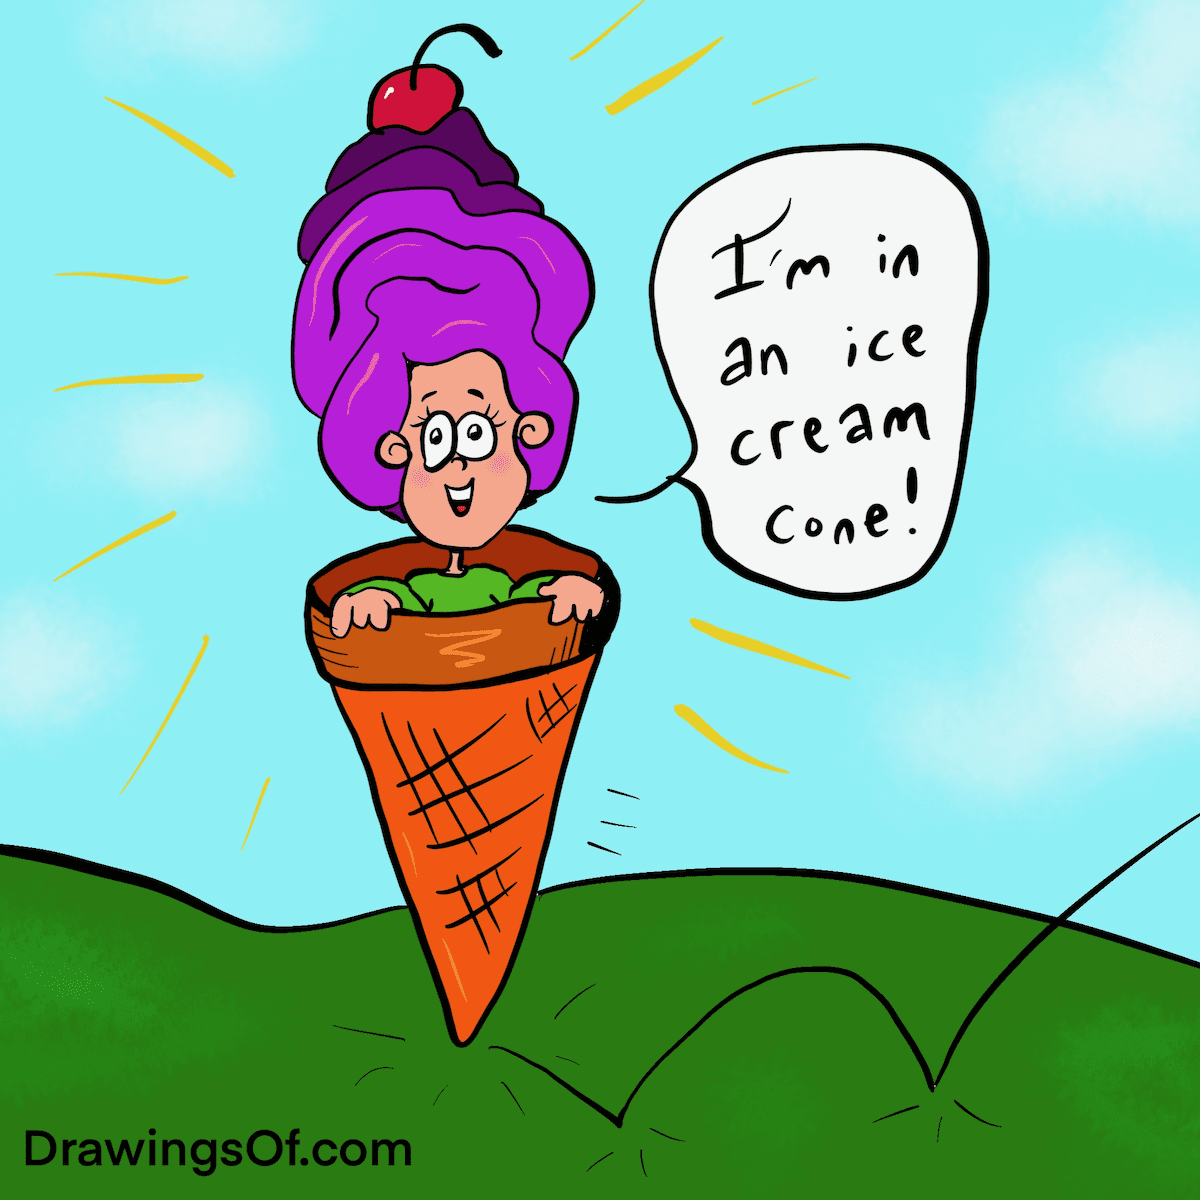 Ice cream cone bouncing